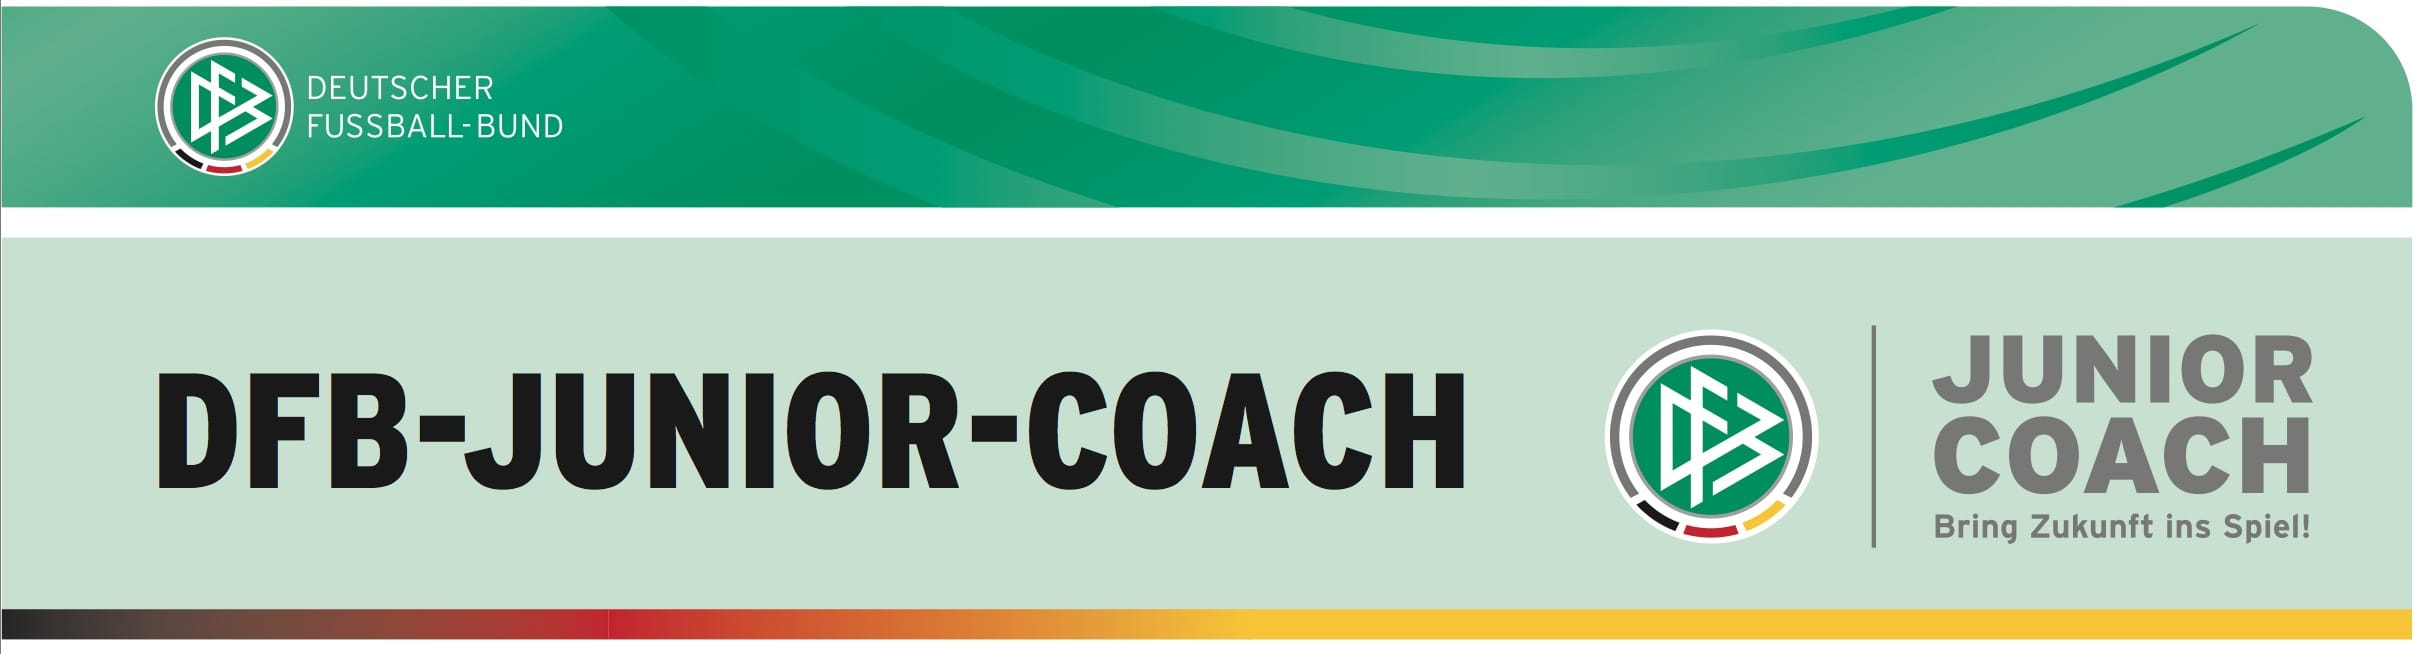 junior-coach-logo